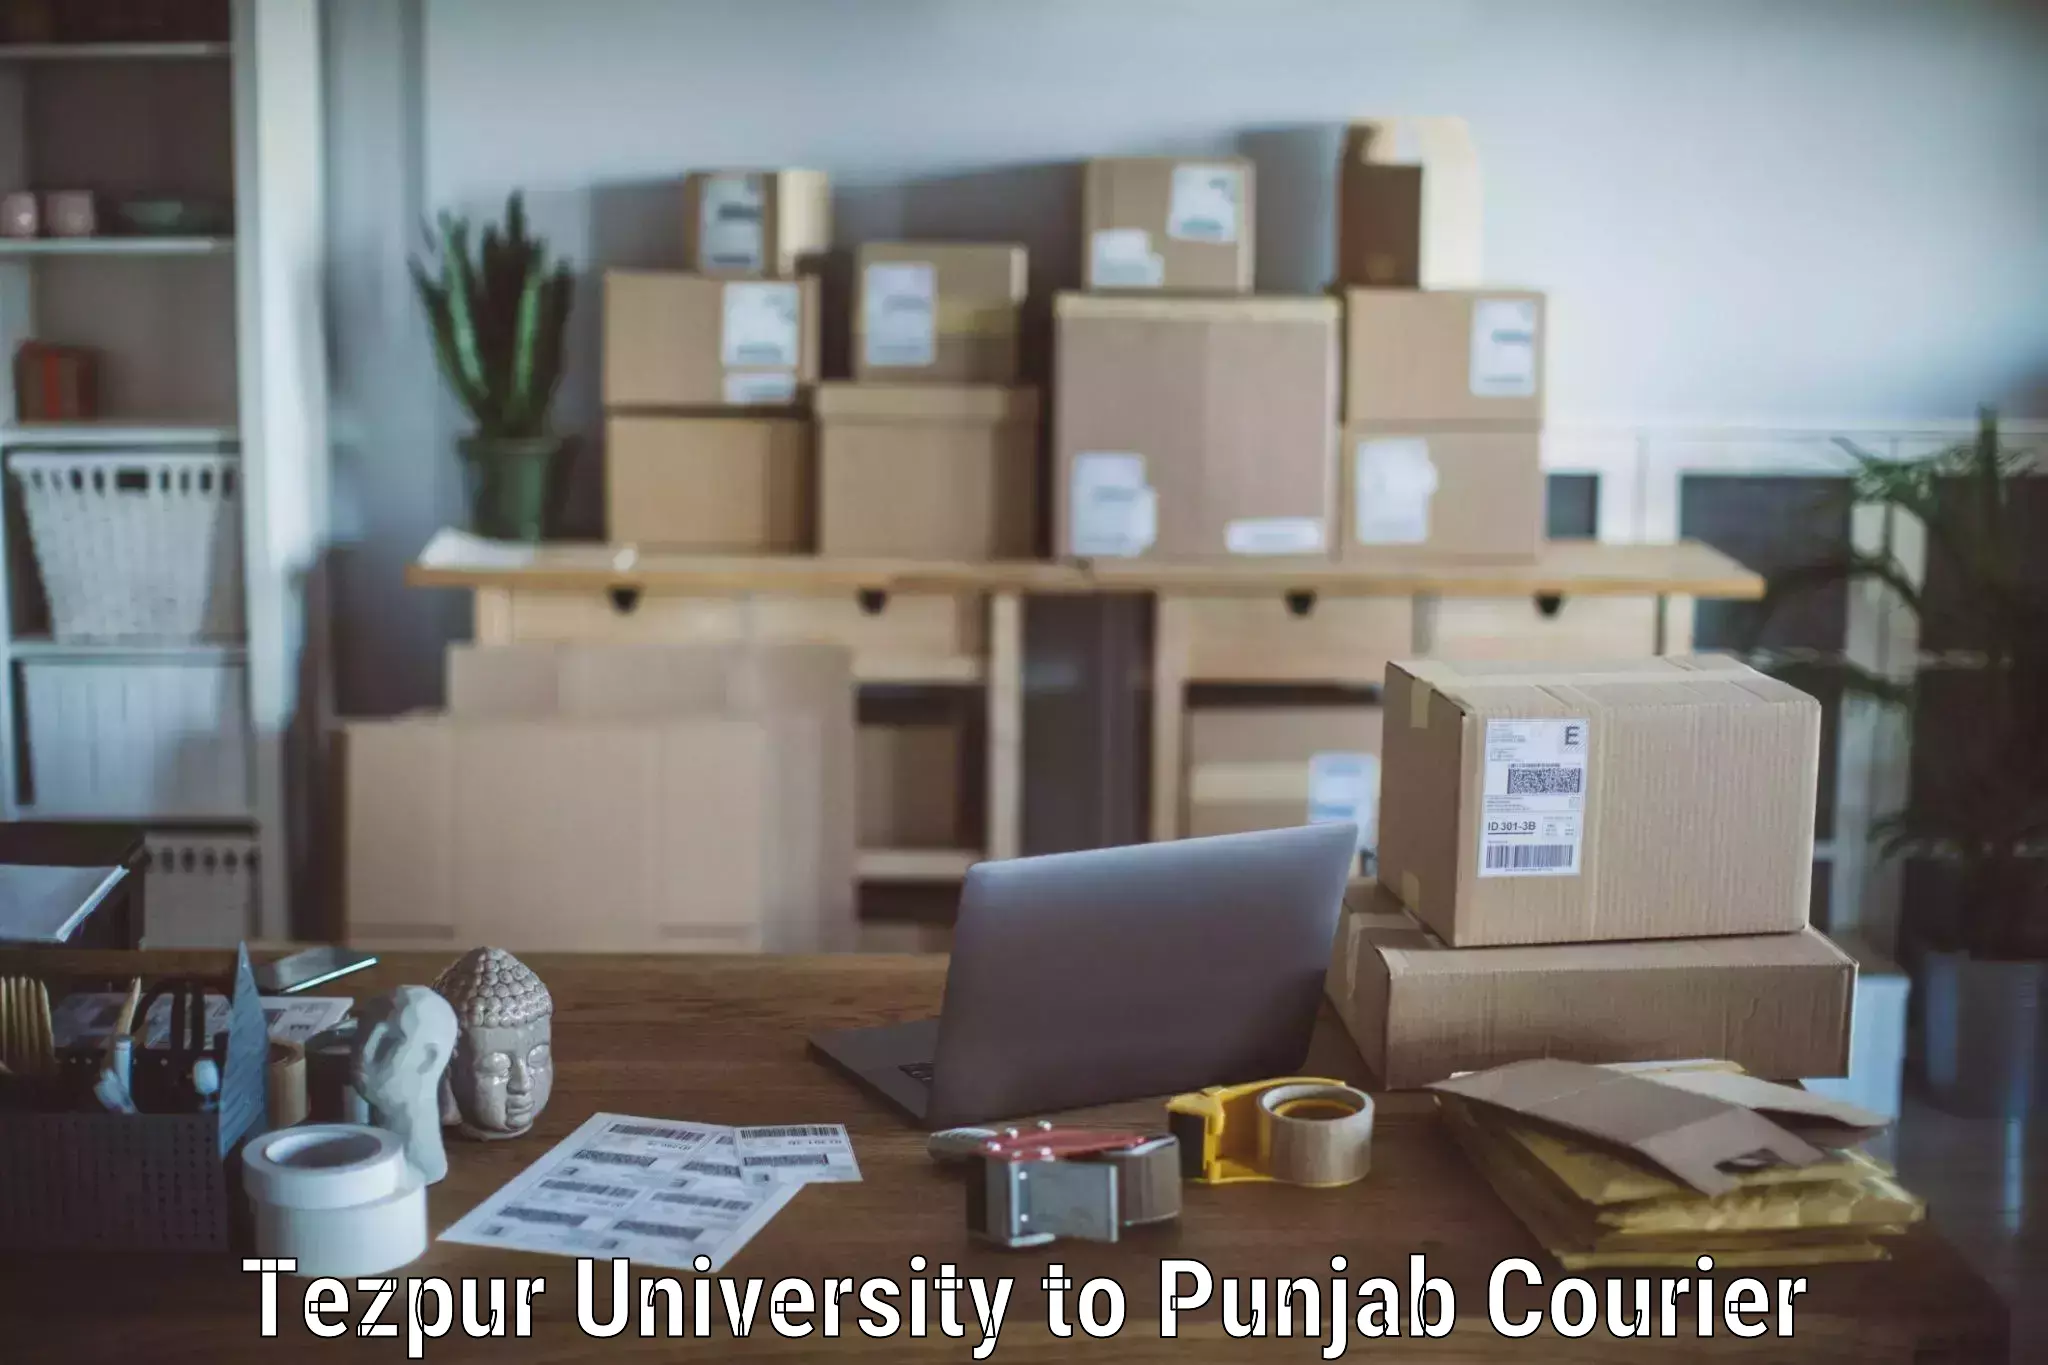 Expert goods movers Tezpur University to Bathinda